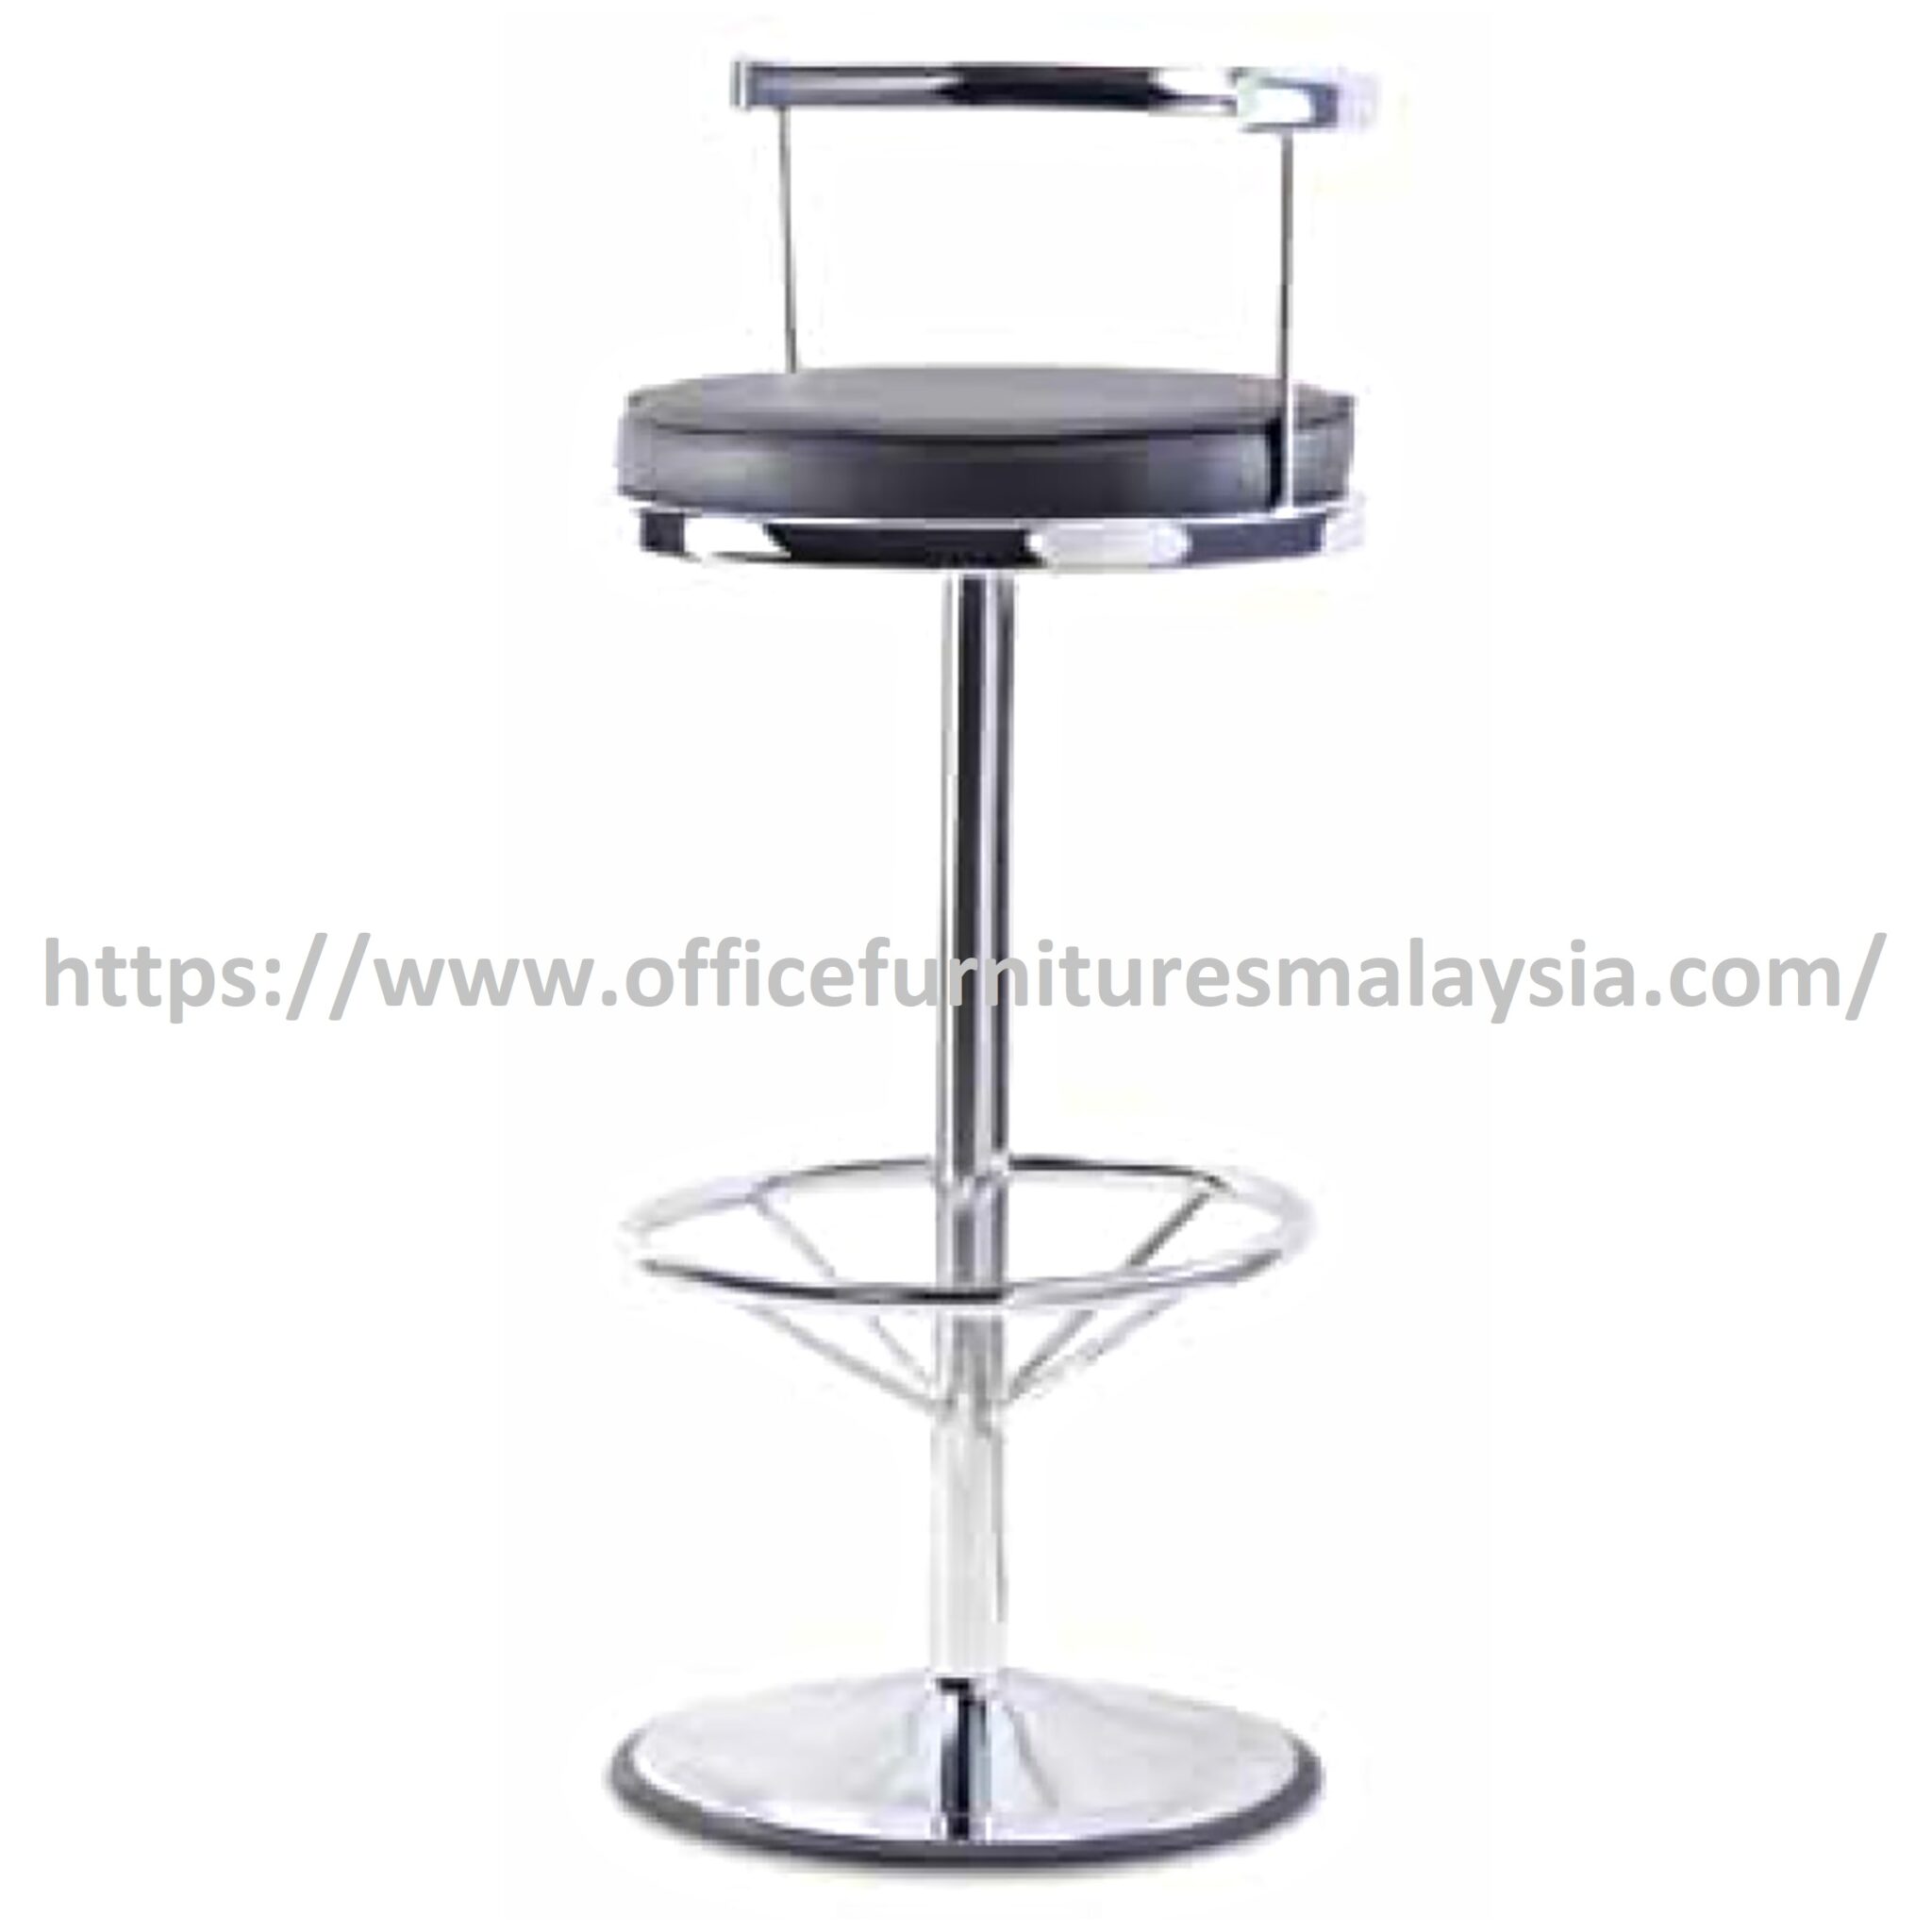 Restaurant Height Bar Tools ZDESB83 | Office Furnitures Malaysia